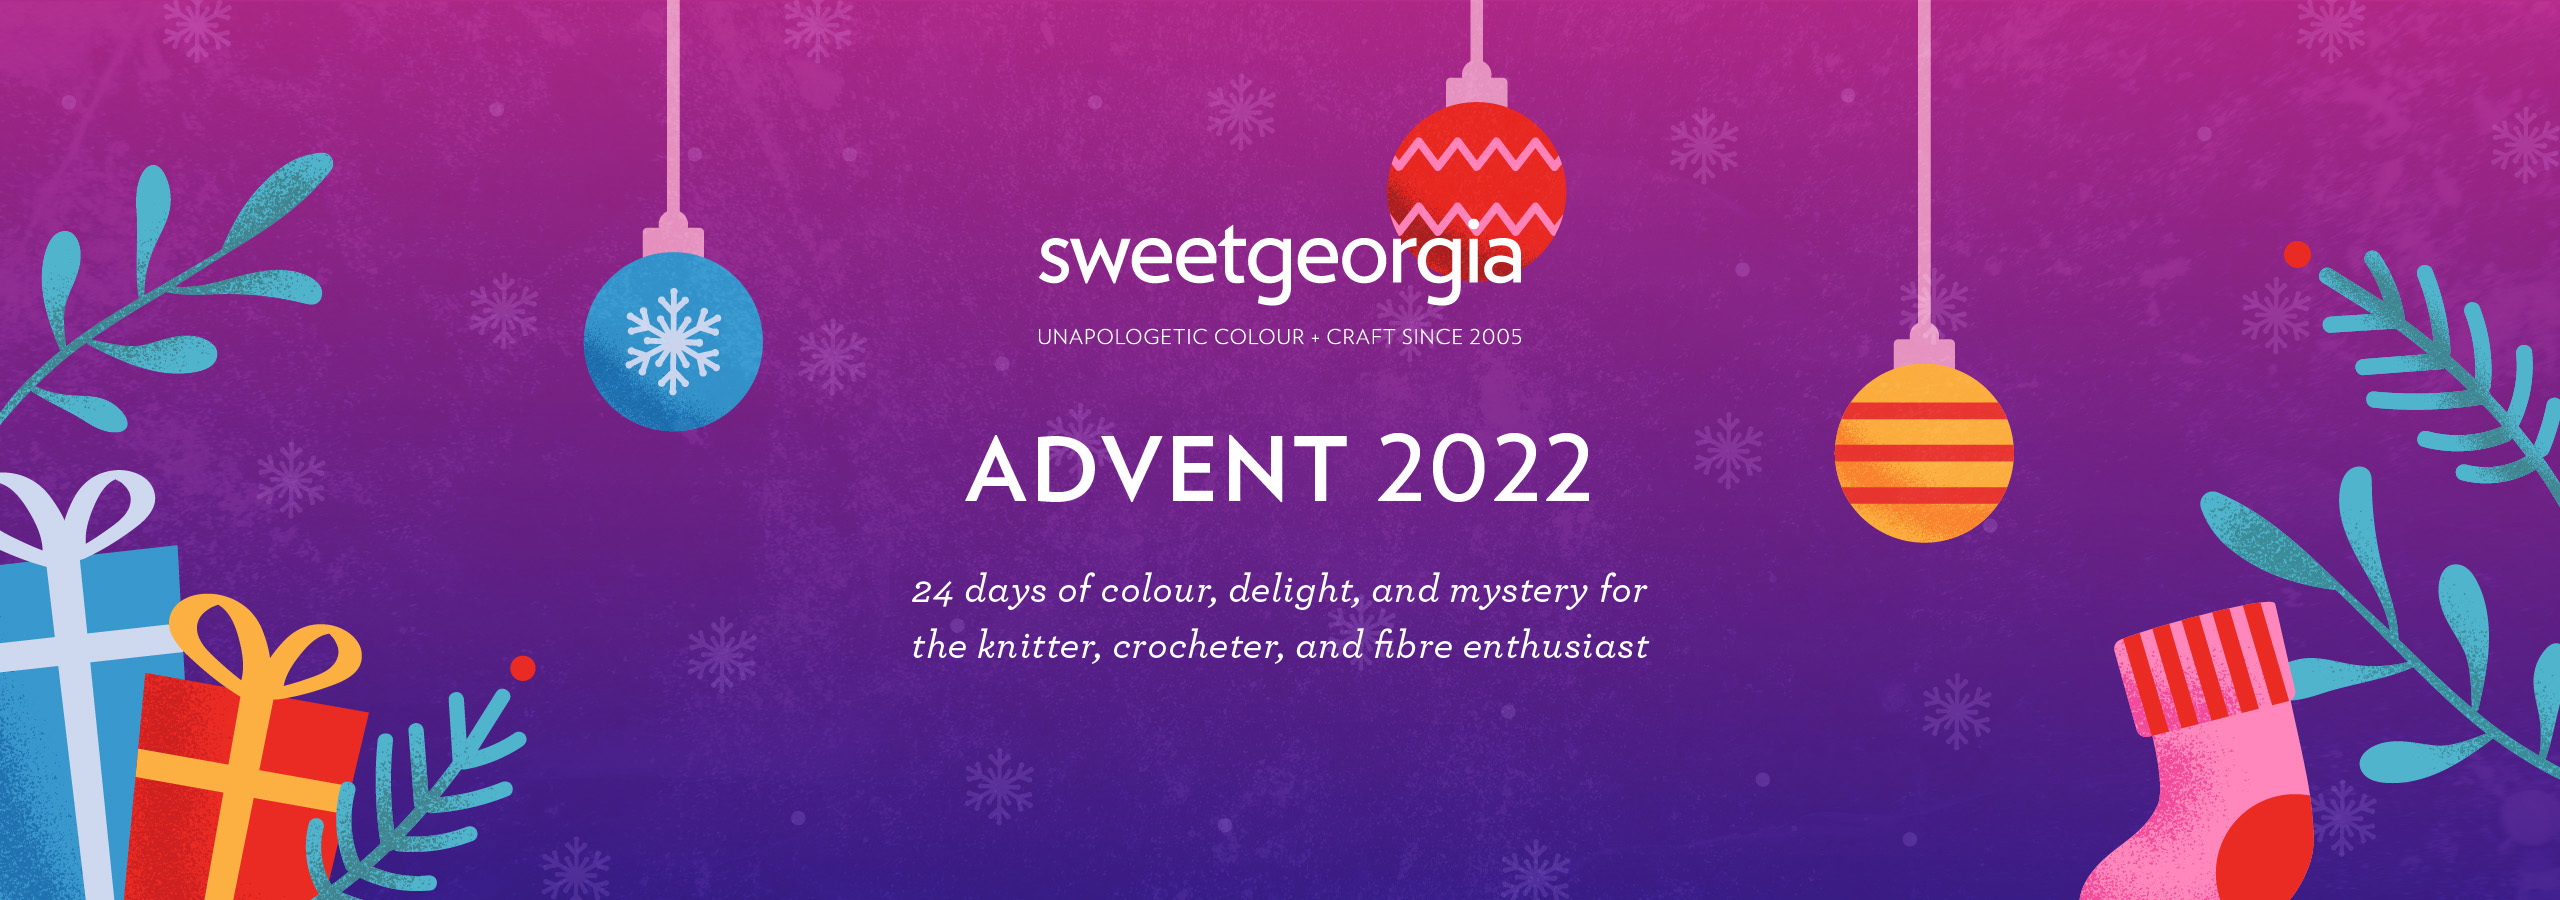 SweetGeorgia yarn and spinning fiber advent calendar 2022